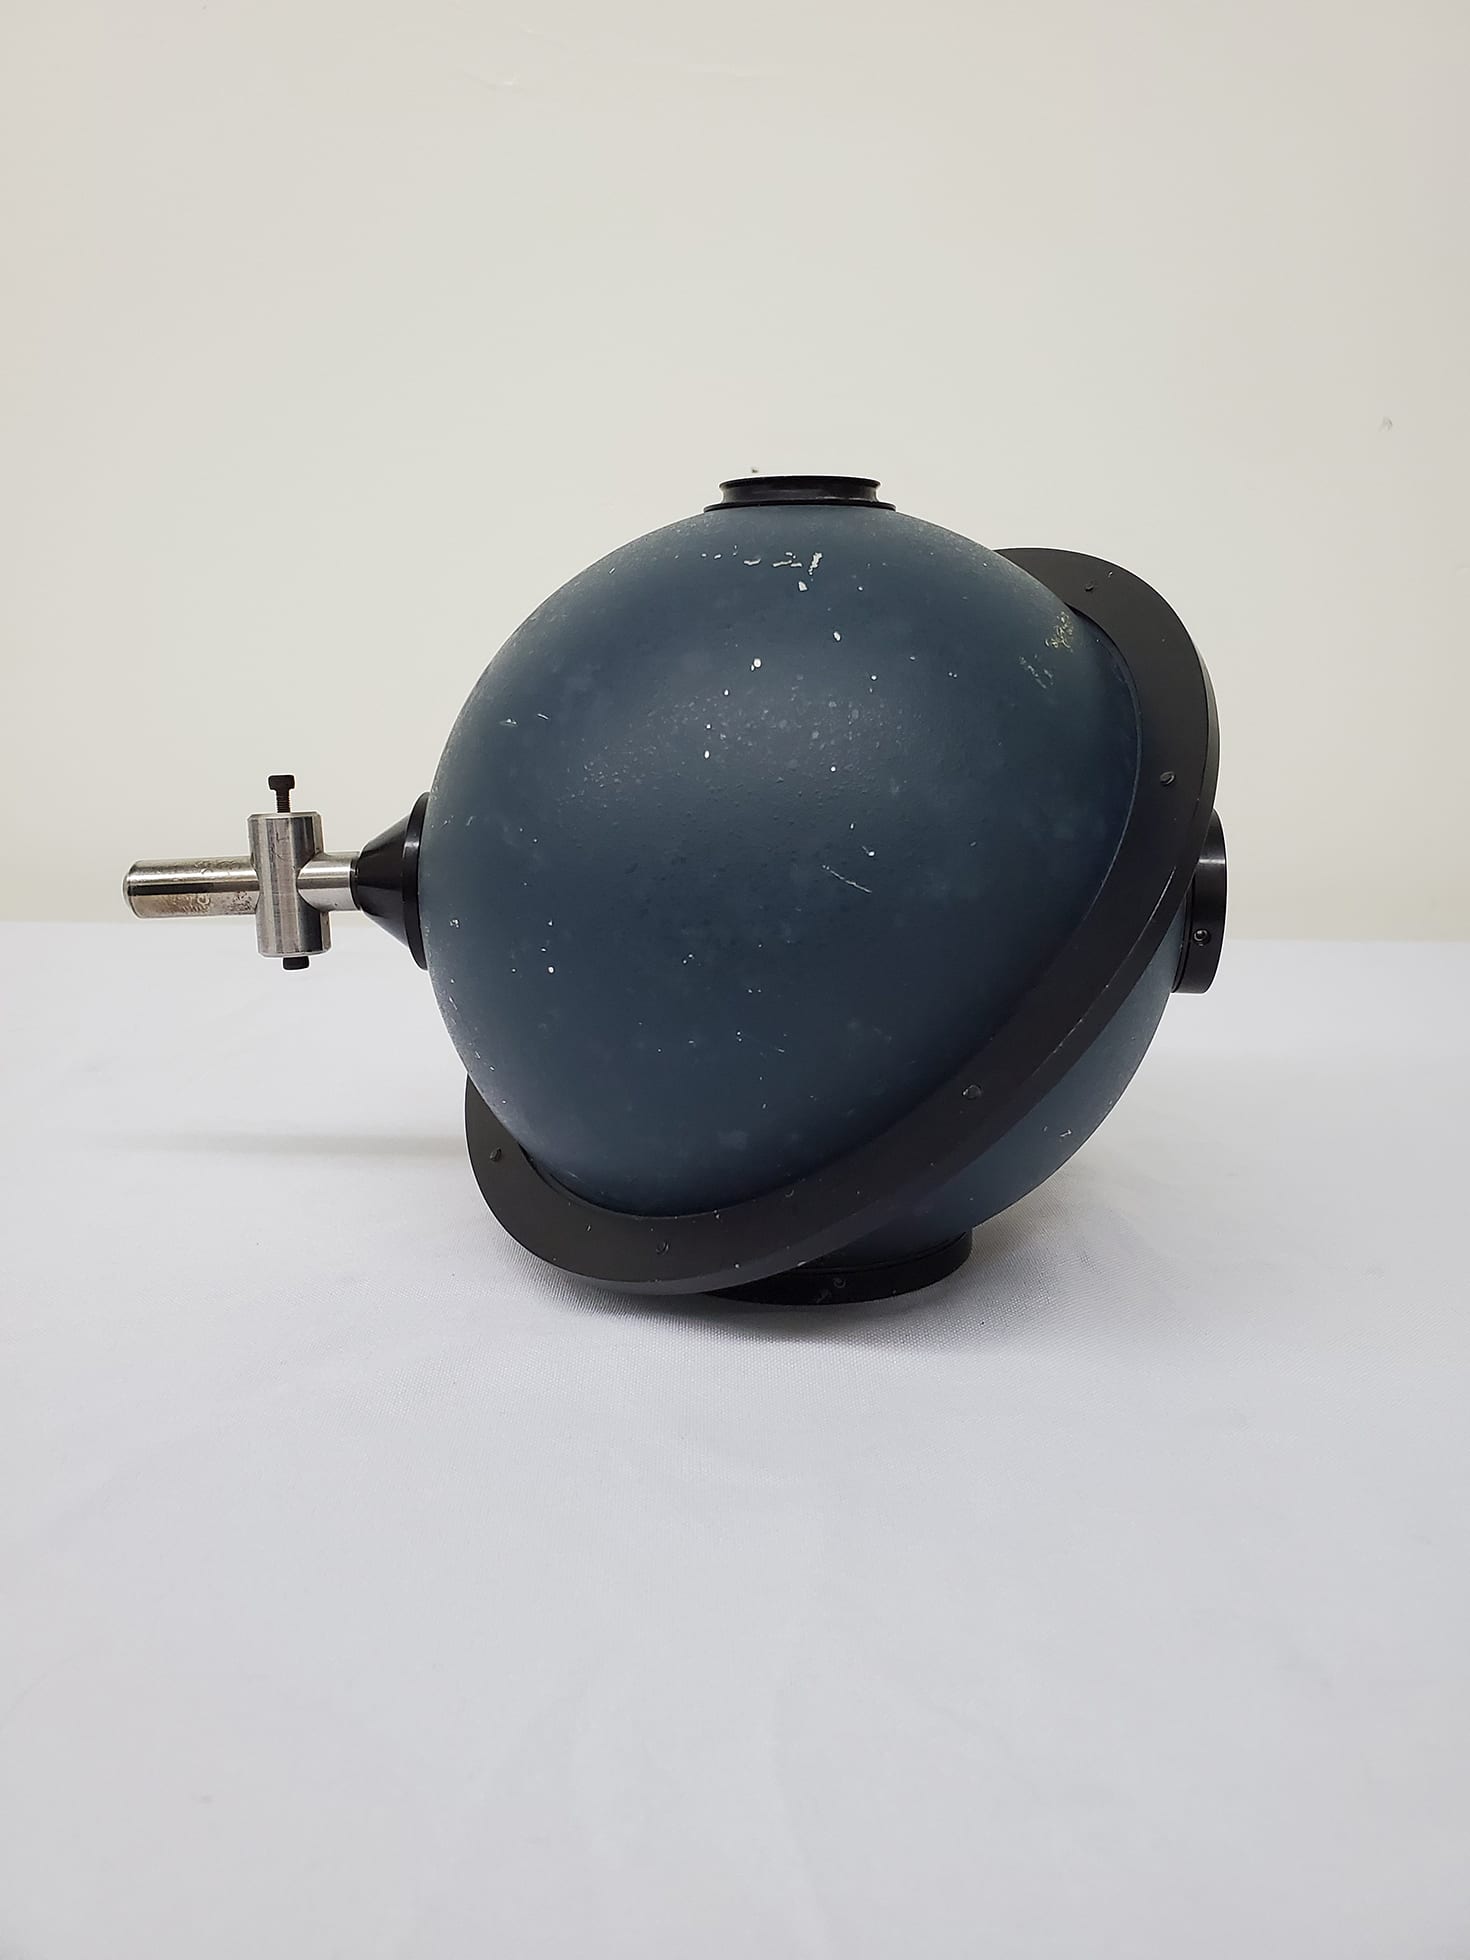 Buy Online Newport-819 C-Spectralon Collimated Beam Integrating Sphere-57488